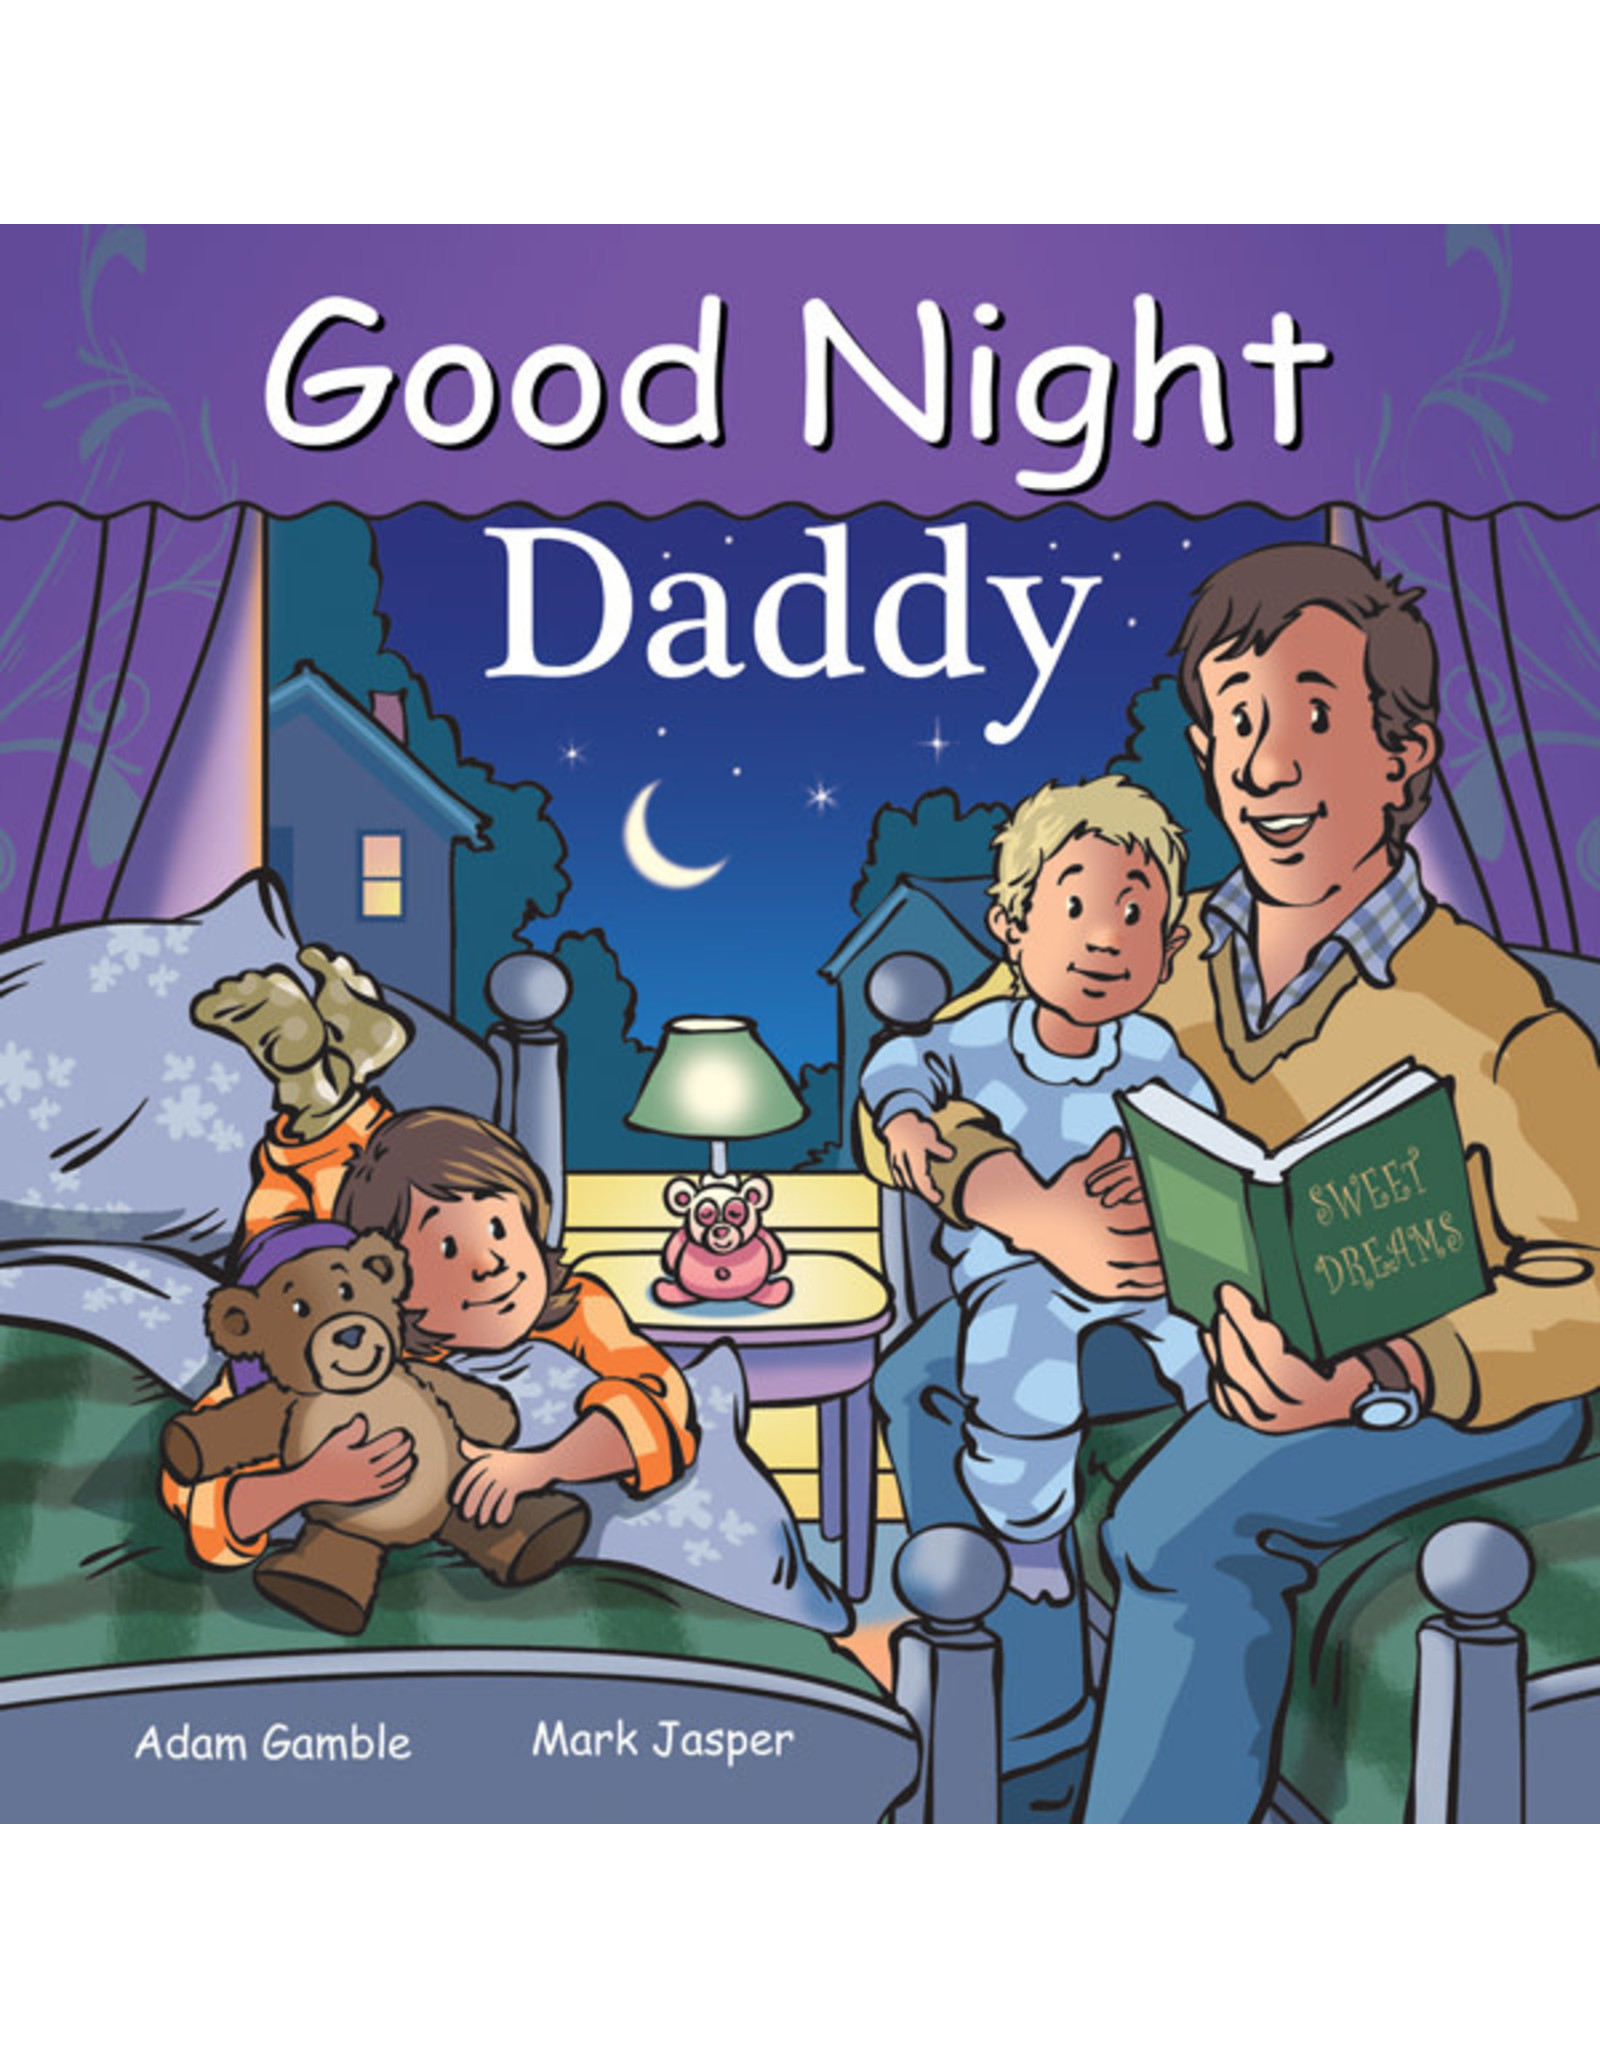 Daddy night. Good Night Daddy. Night of the dad карта. Good Night dad and a child. Good Night Mummy good Night Daddy.